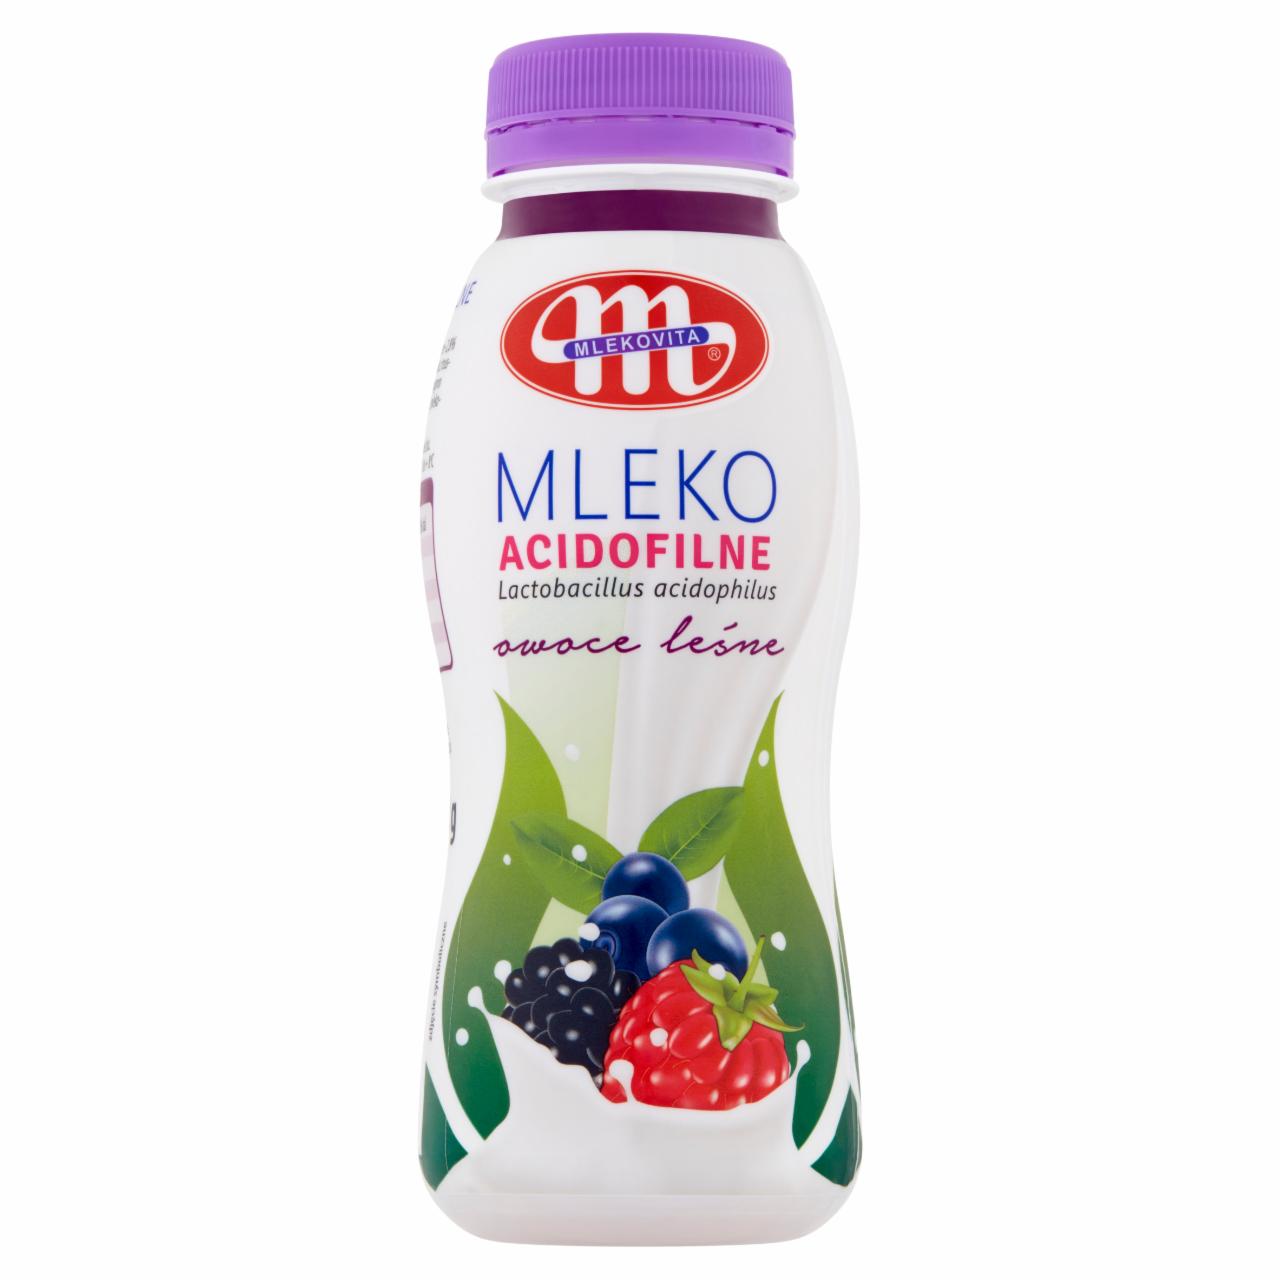 Zdjęcia - Mlekovita Mleko acidofilne owoce leśne 250 g